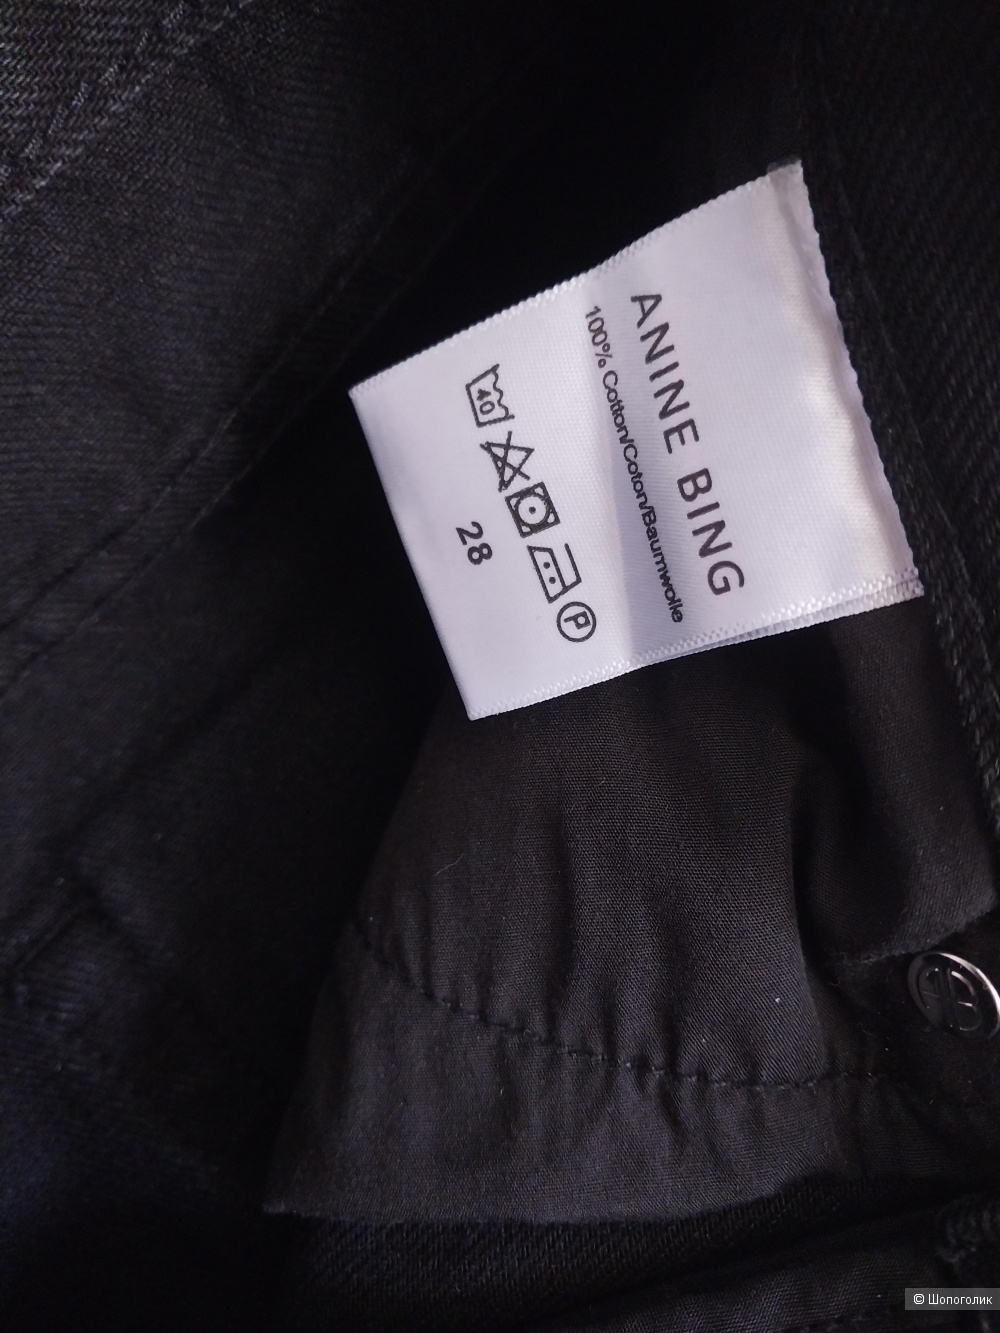 Anine Bing джинсы, 28 размер